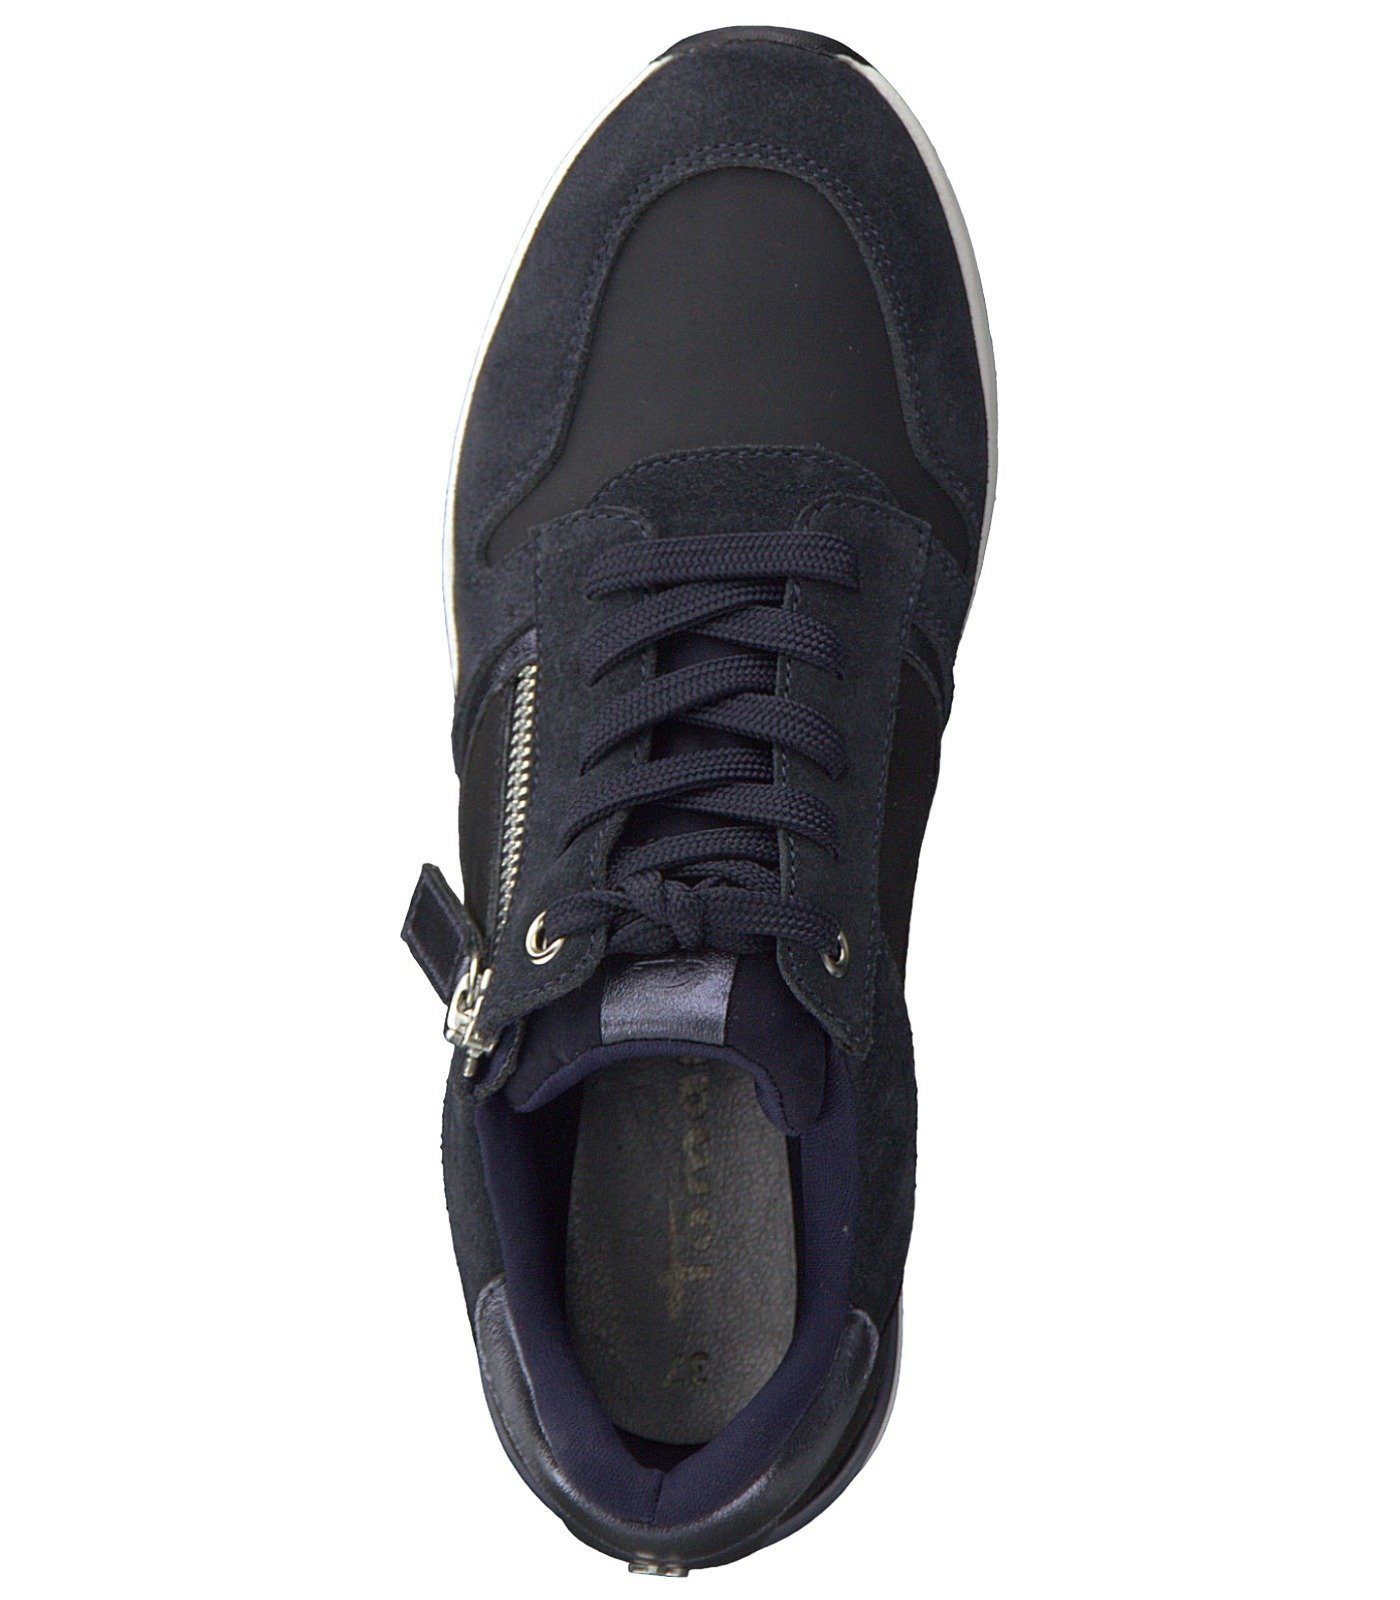 Tamaris Leder/Textil Sneaker (NAVY COMB) Blau Sneaker